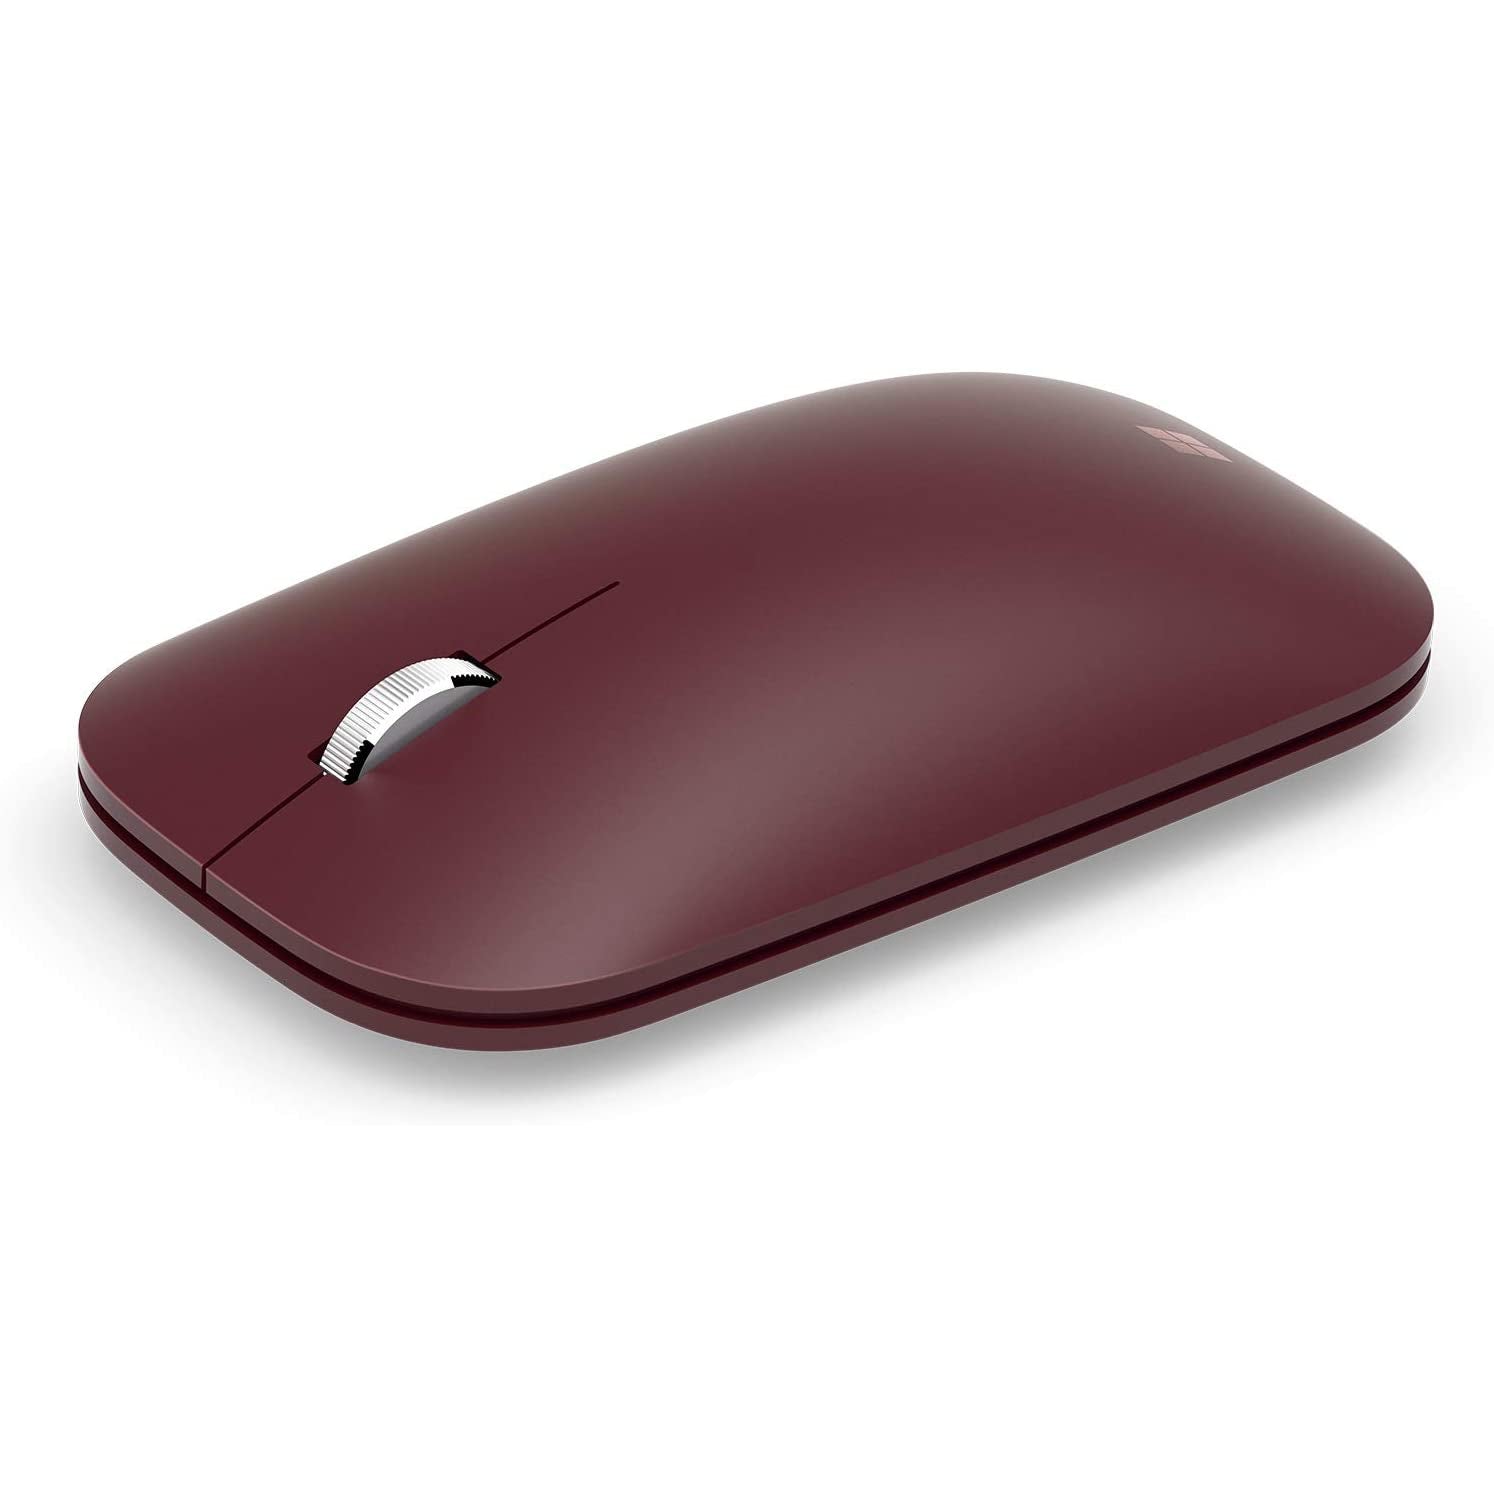 Microsoft Modern Mobile Mouse - Burgundy